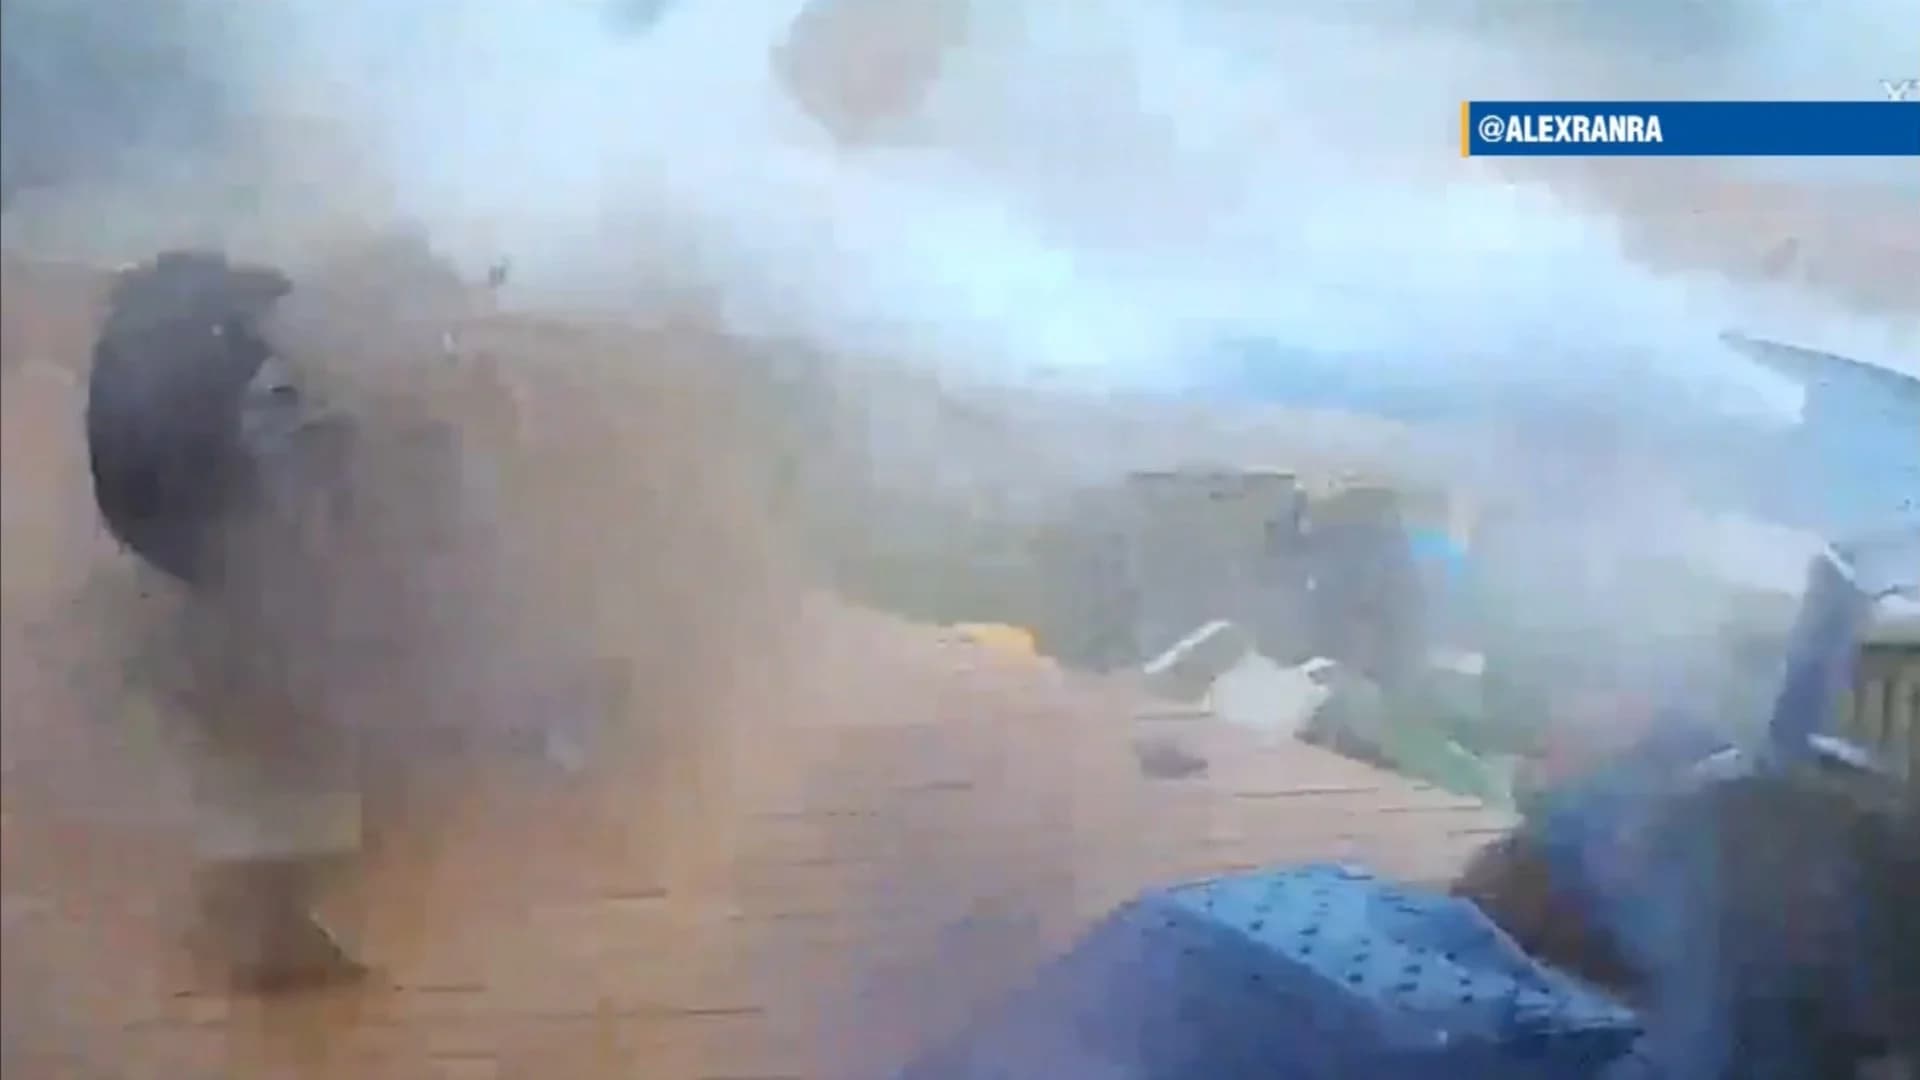 Weather officials: Tornado touchdown confirmed in Mullica Hill